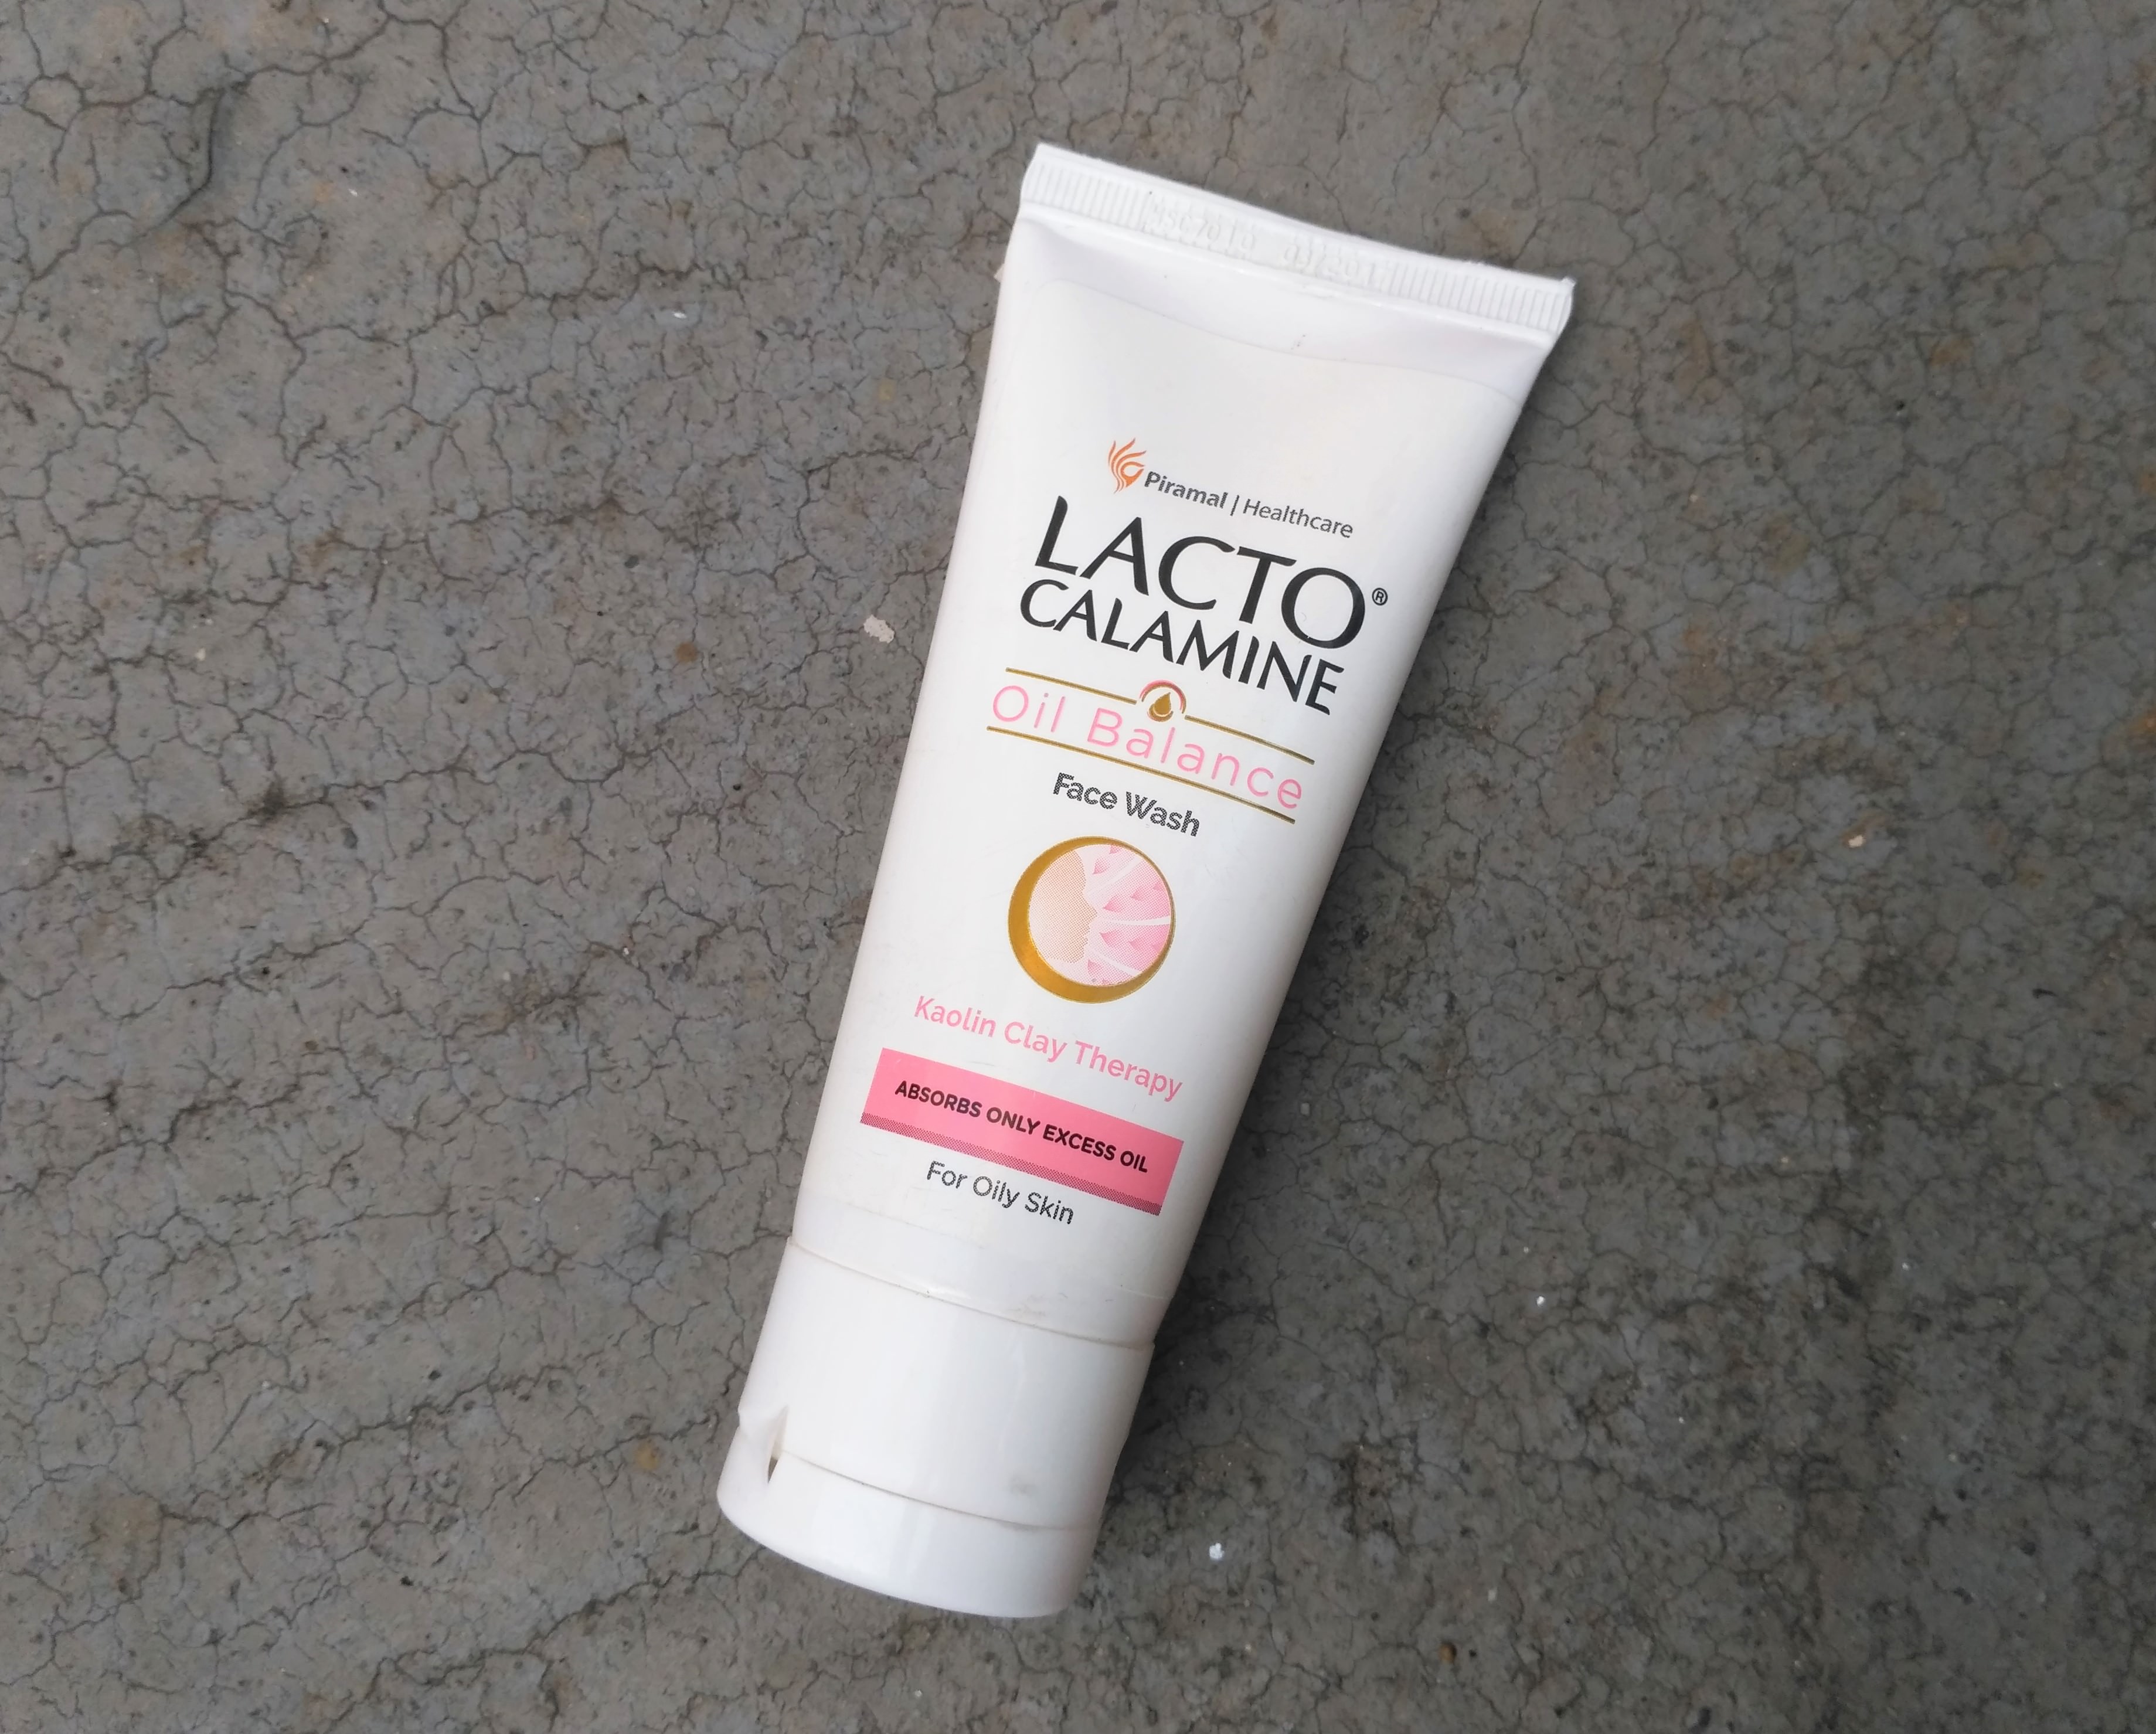 Lacto Calamine Oil Balance Face Wash Review